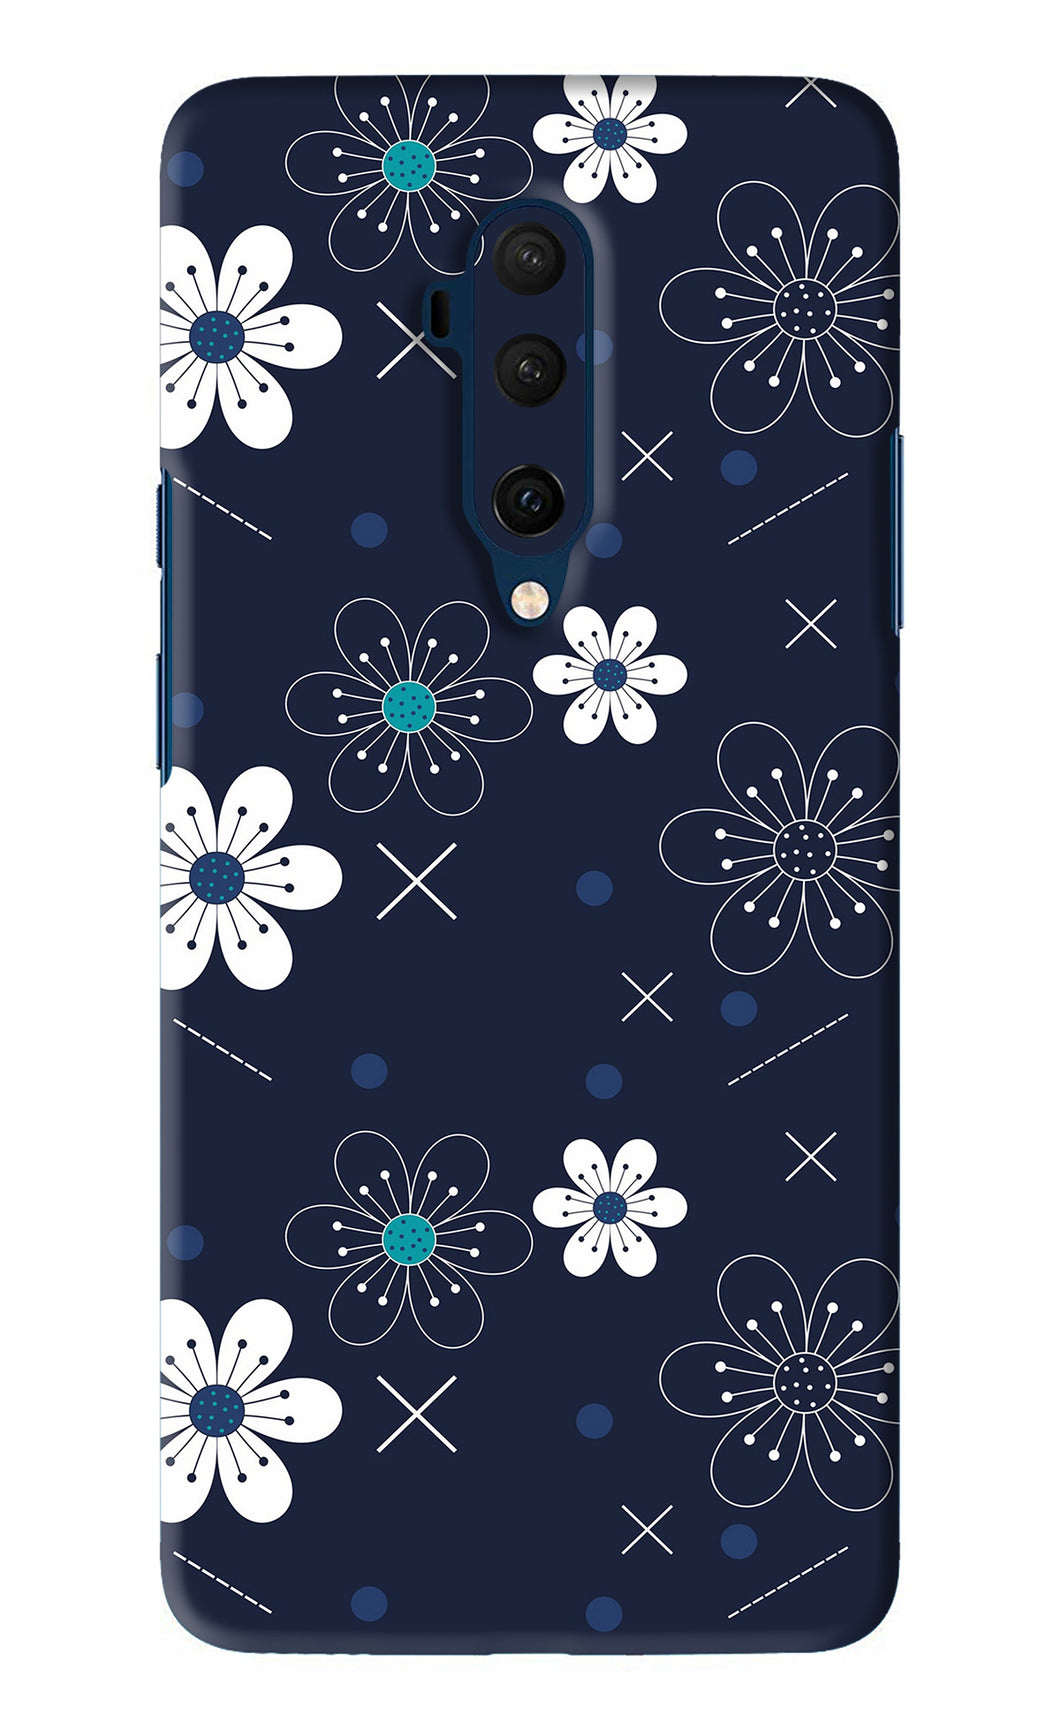 Flowers 4 OnePlus 7T Pro Back Skin Wrap